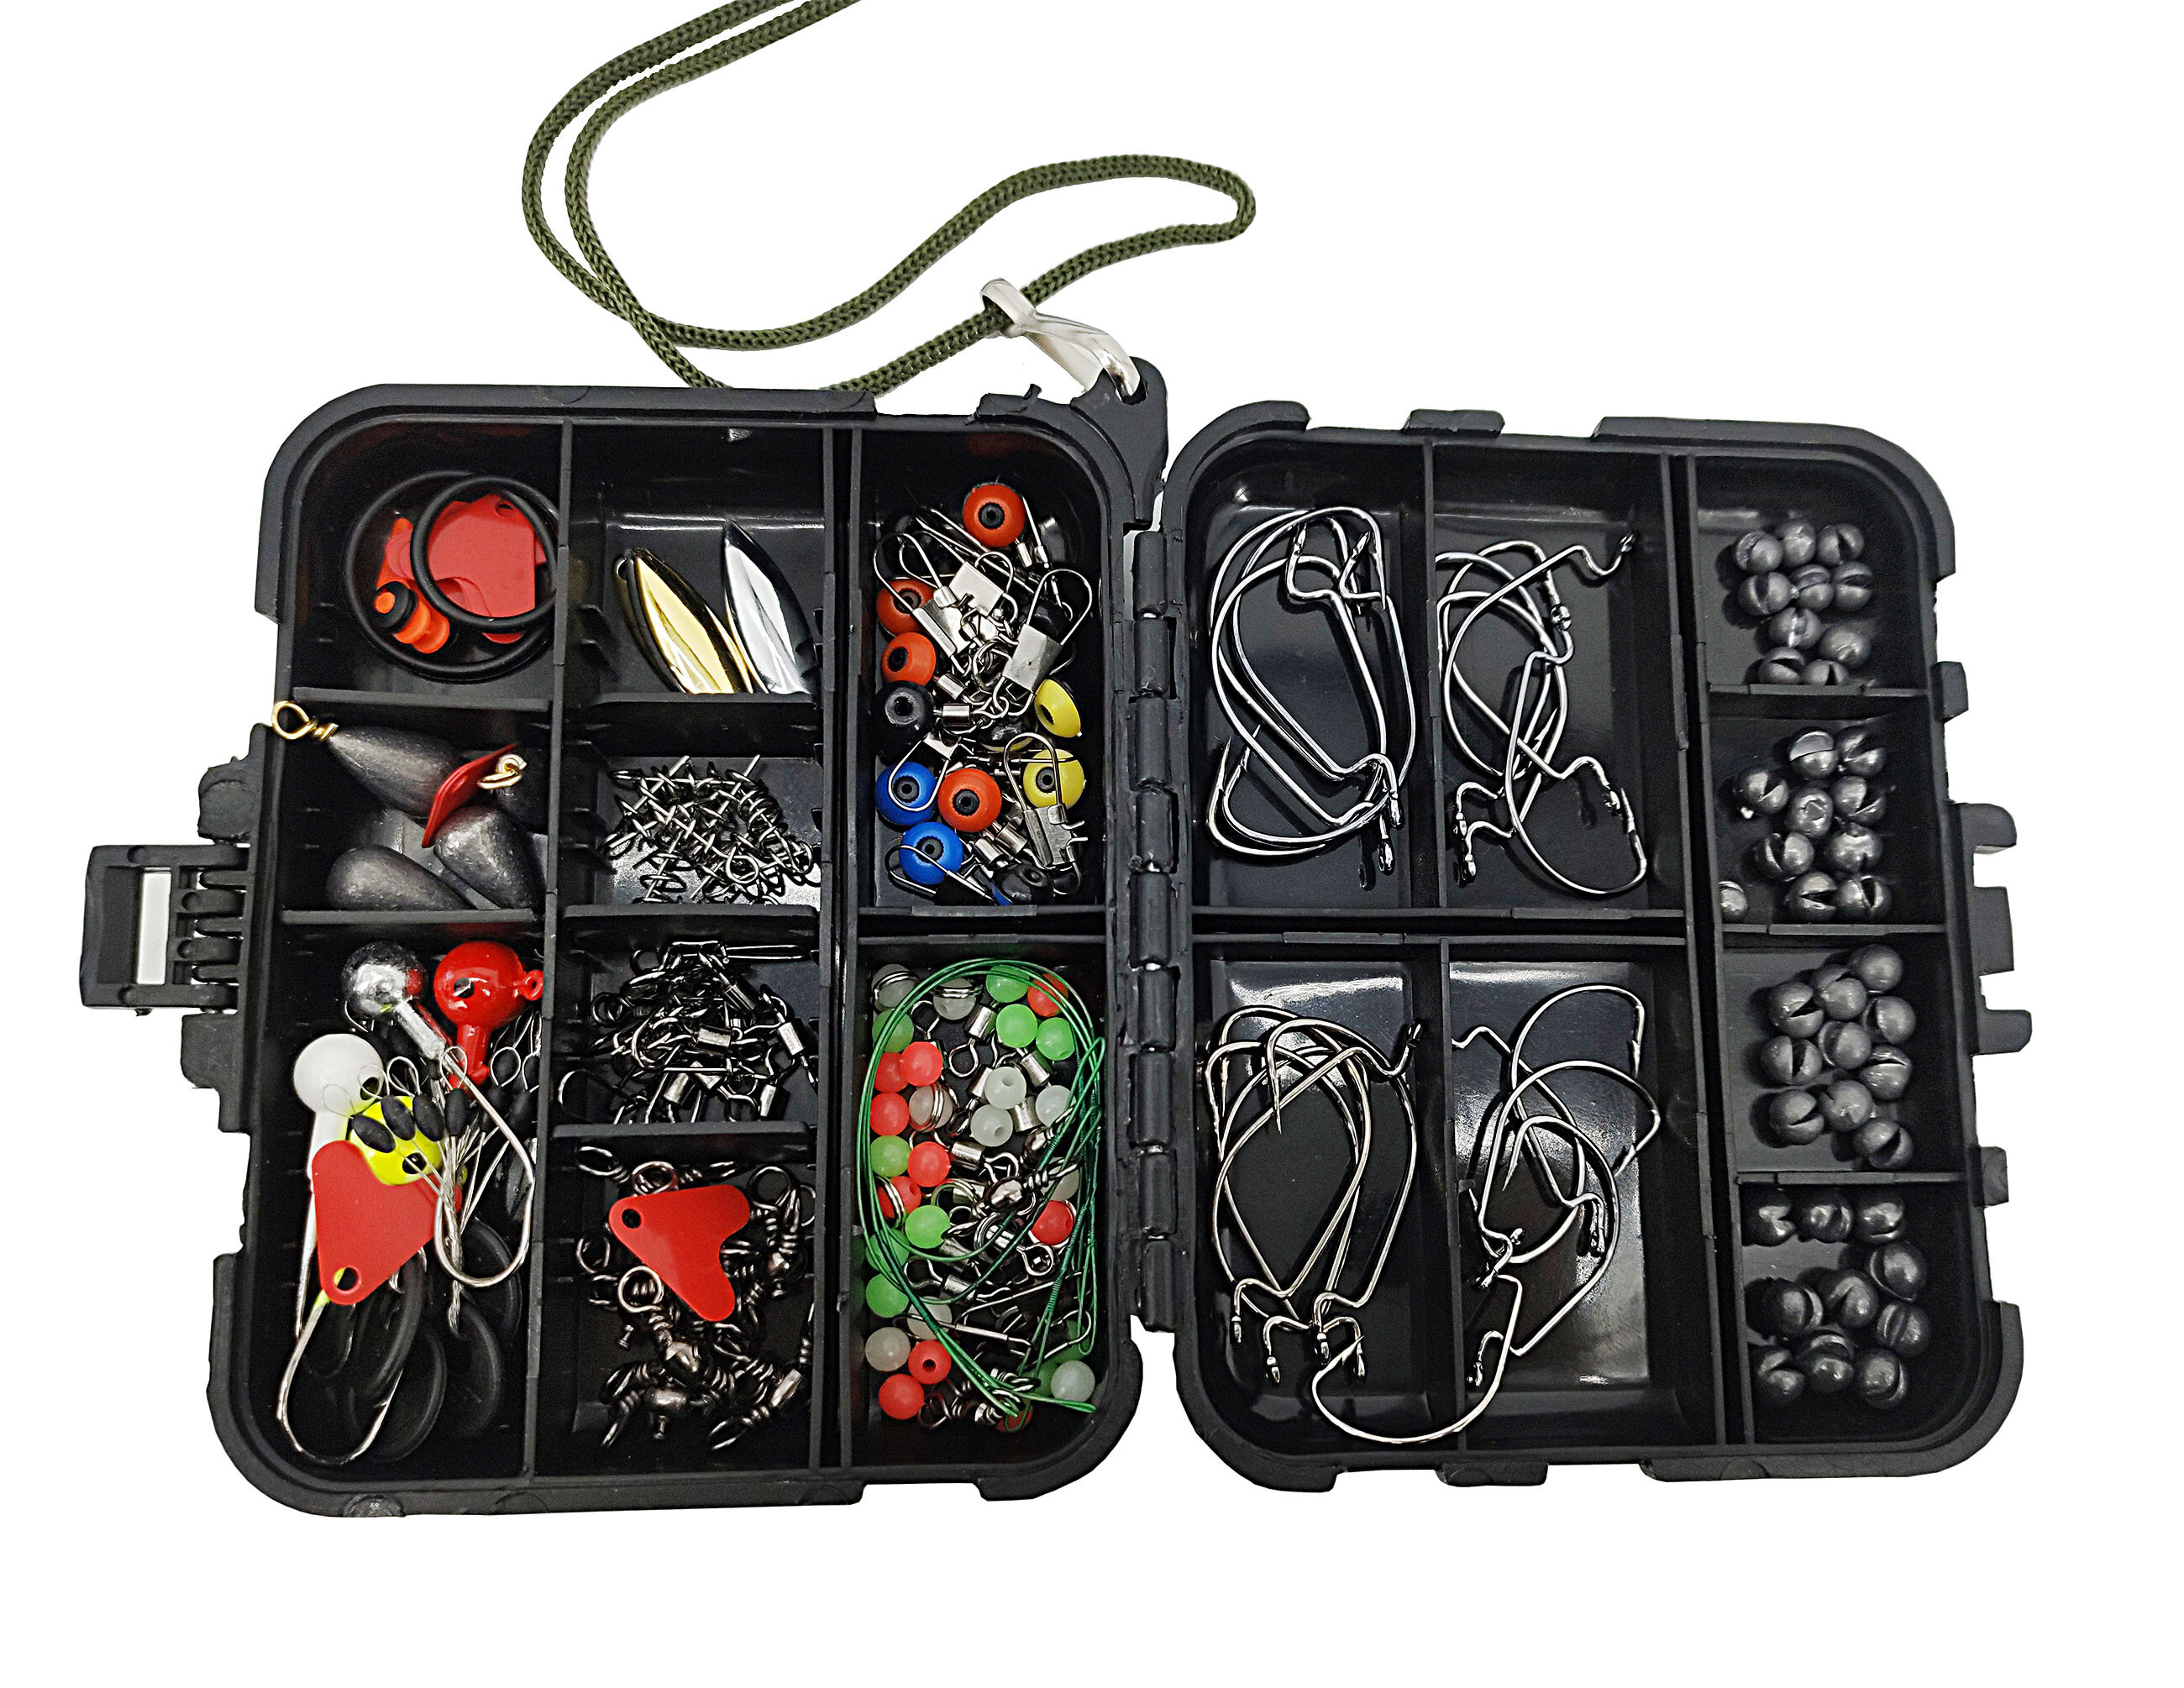 FixtureDisplays 188 Fishing Accessories Kit, Including Jig Hooks